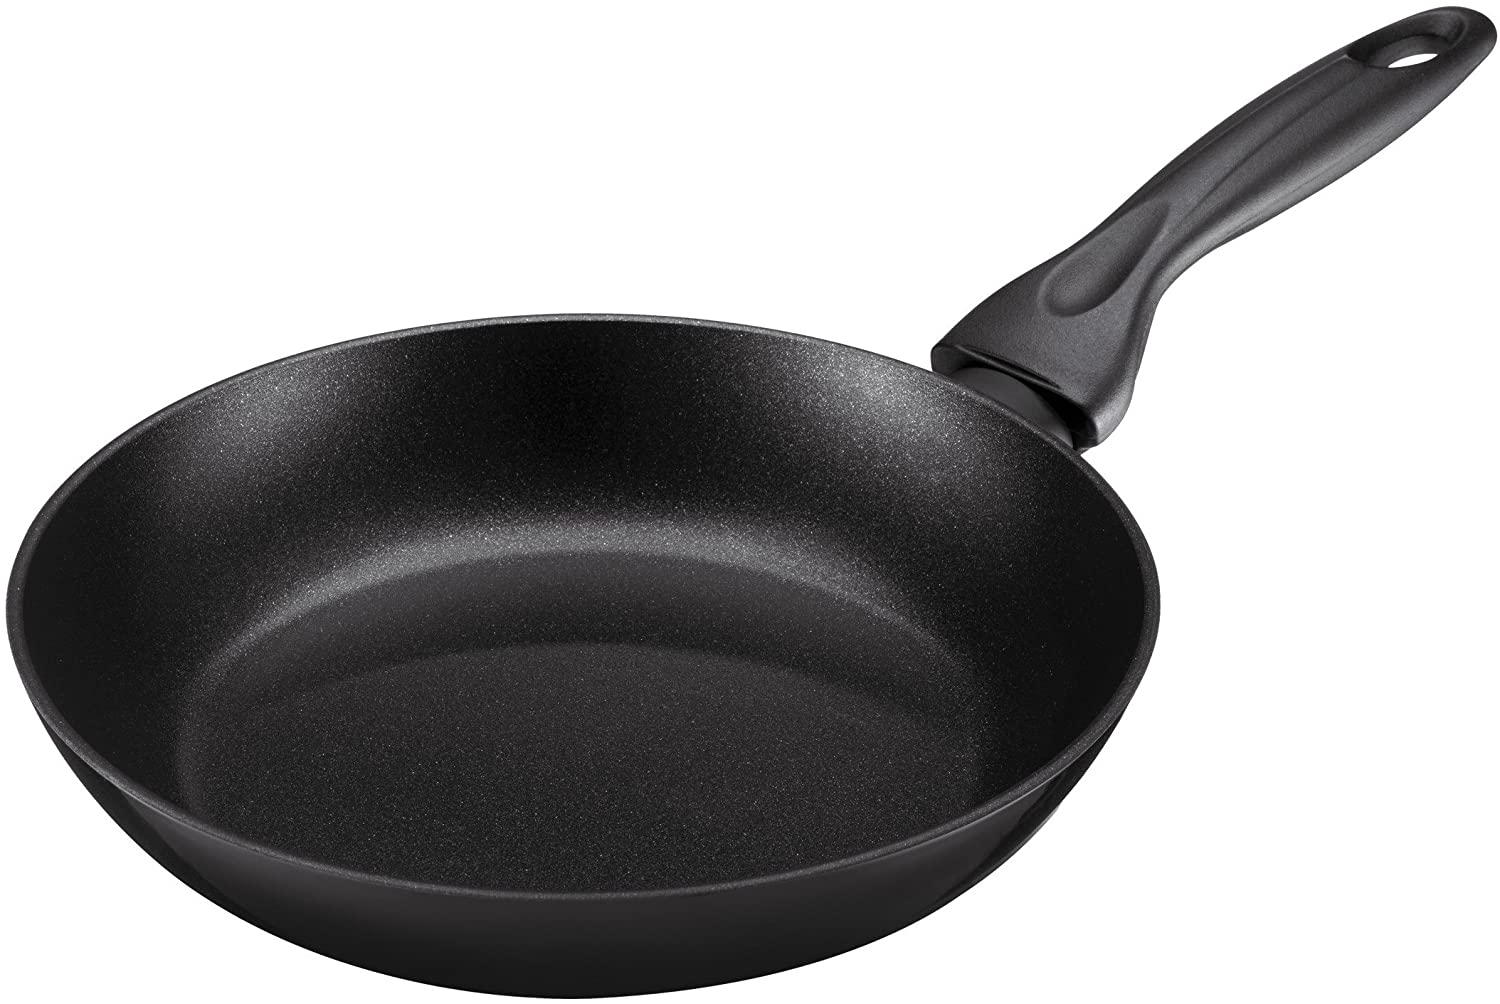 Kuhn Rikon Cucina Non-Stick Frying Pan, 24 cm, Black